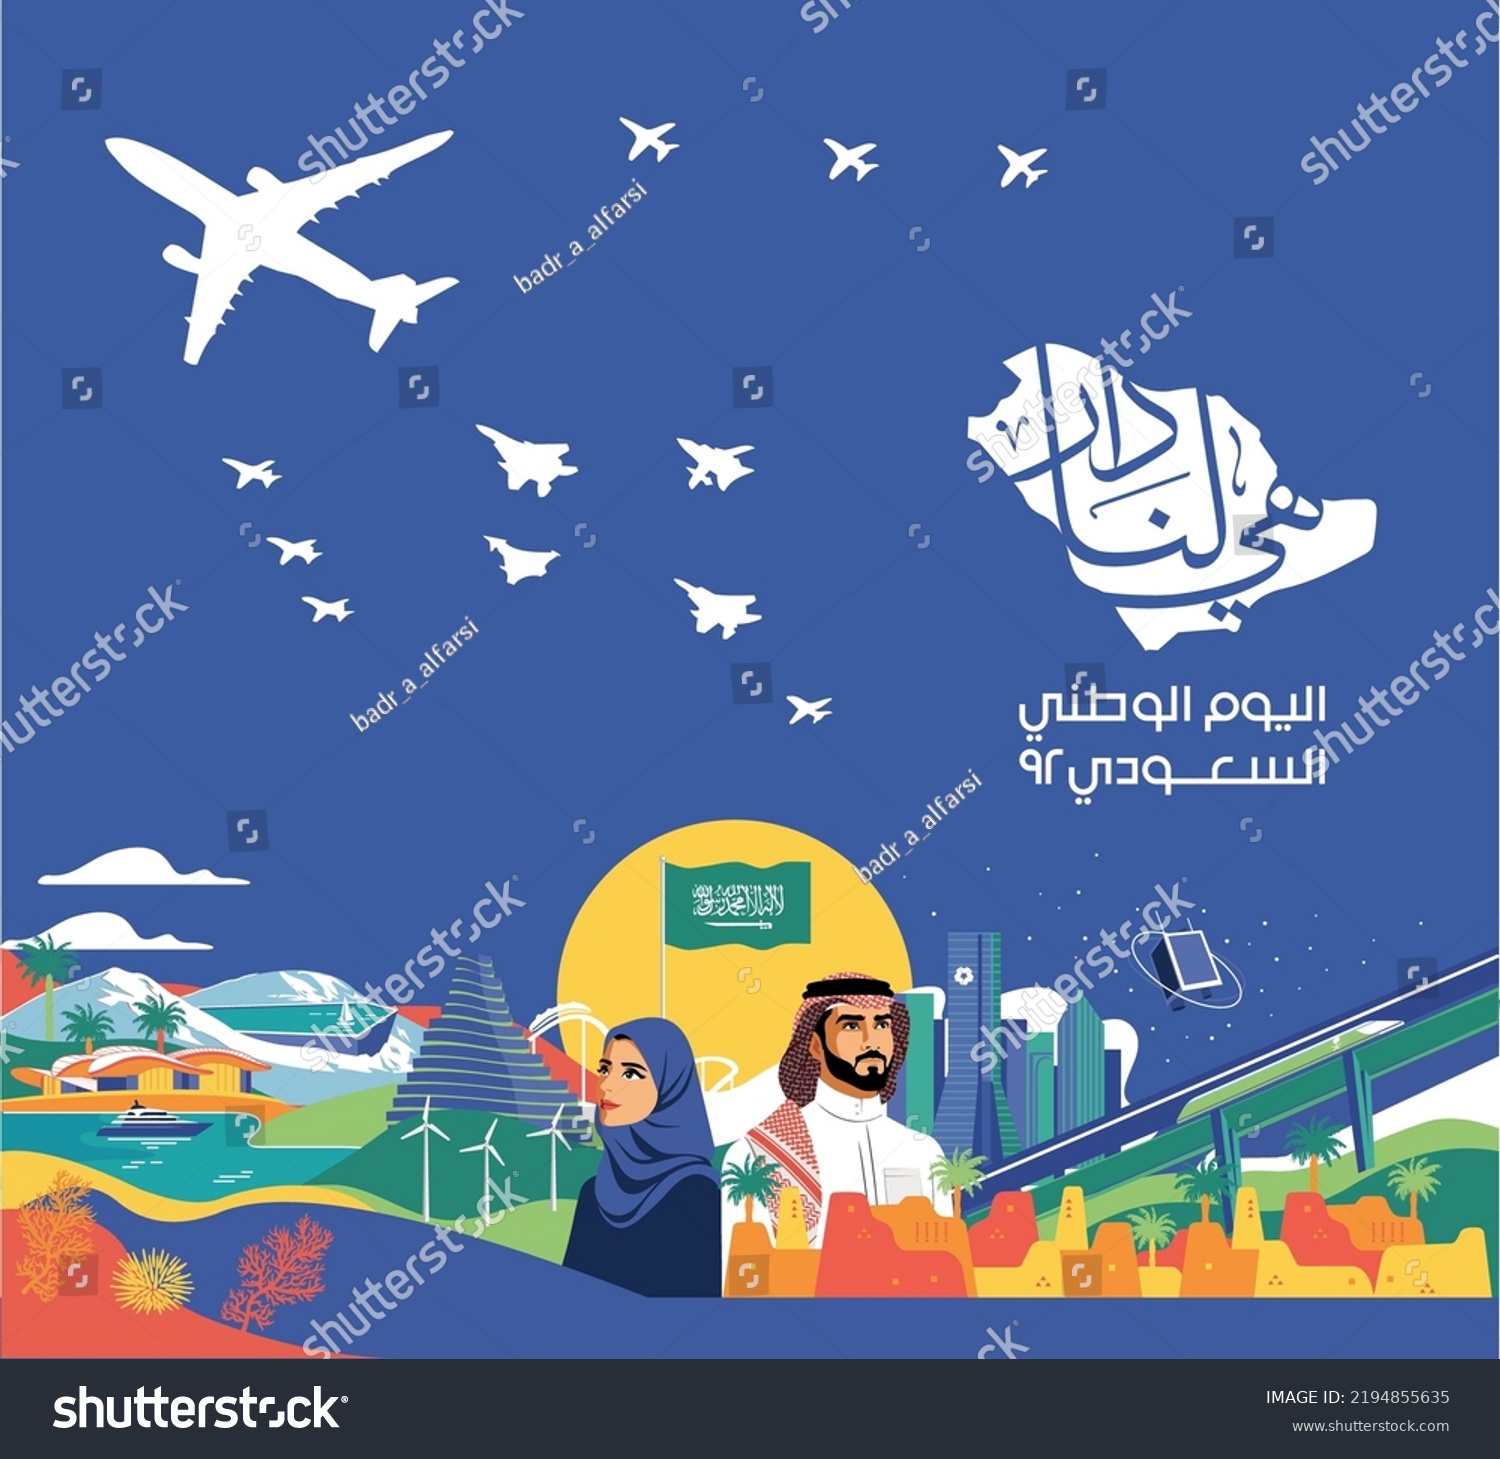 Saudi National Day 92 ,Air Show, (Translation of arabic text : Saudi National Day 92) #2194855635